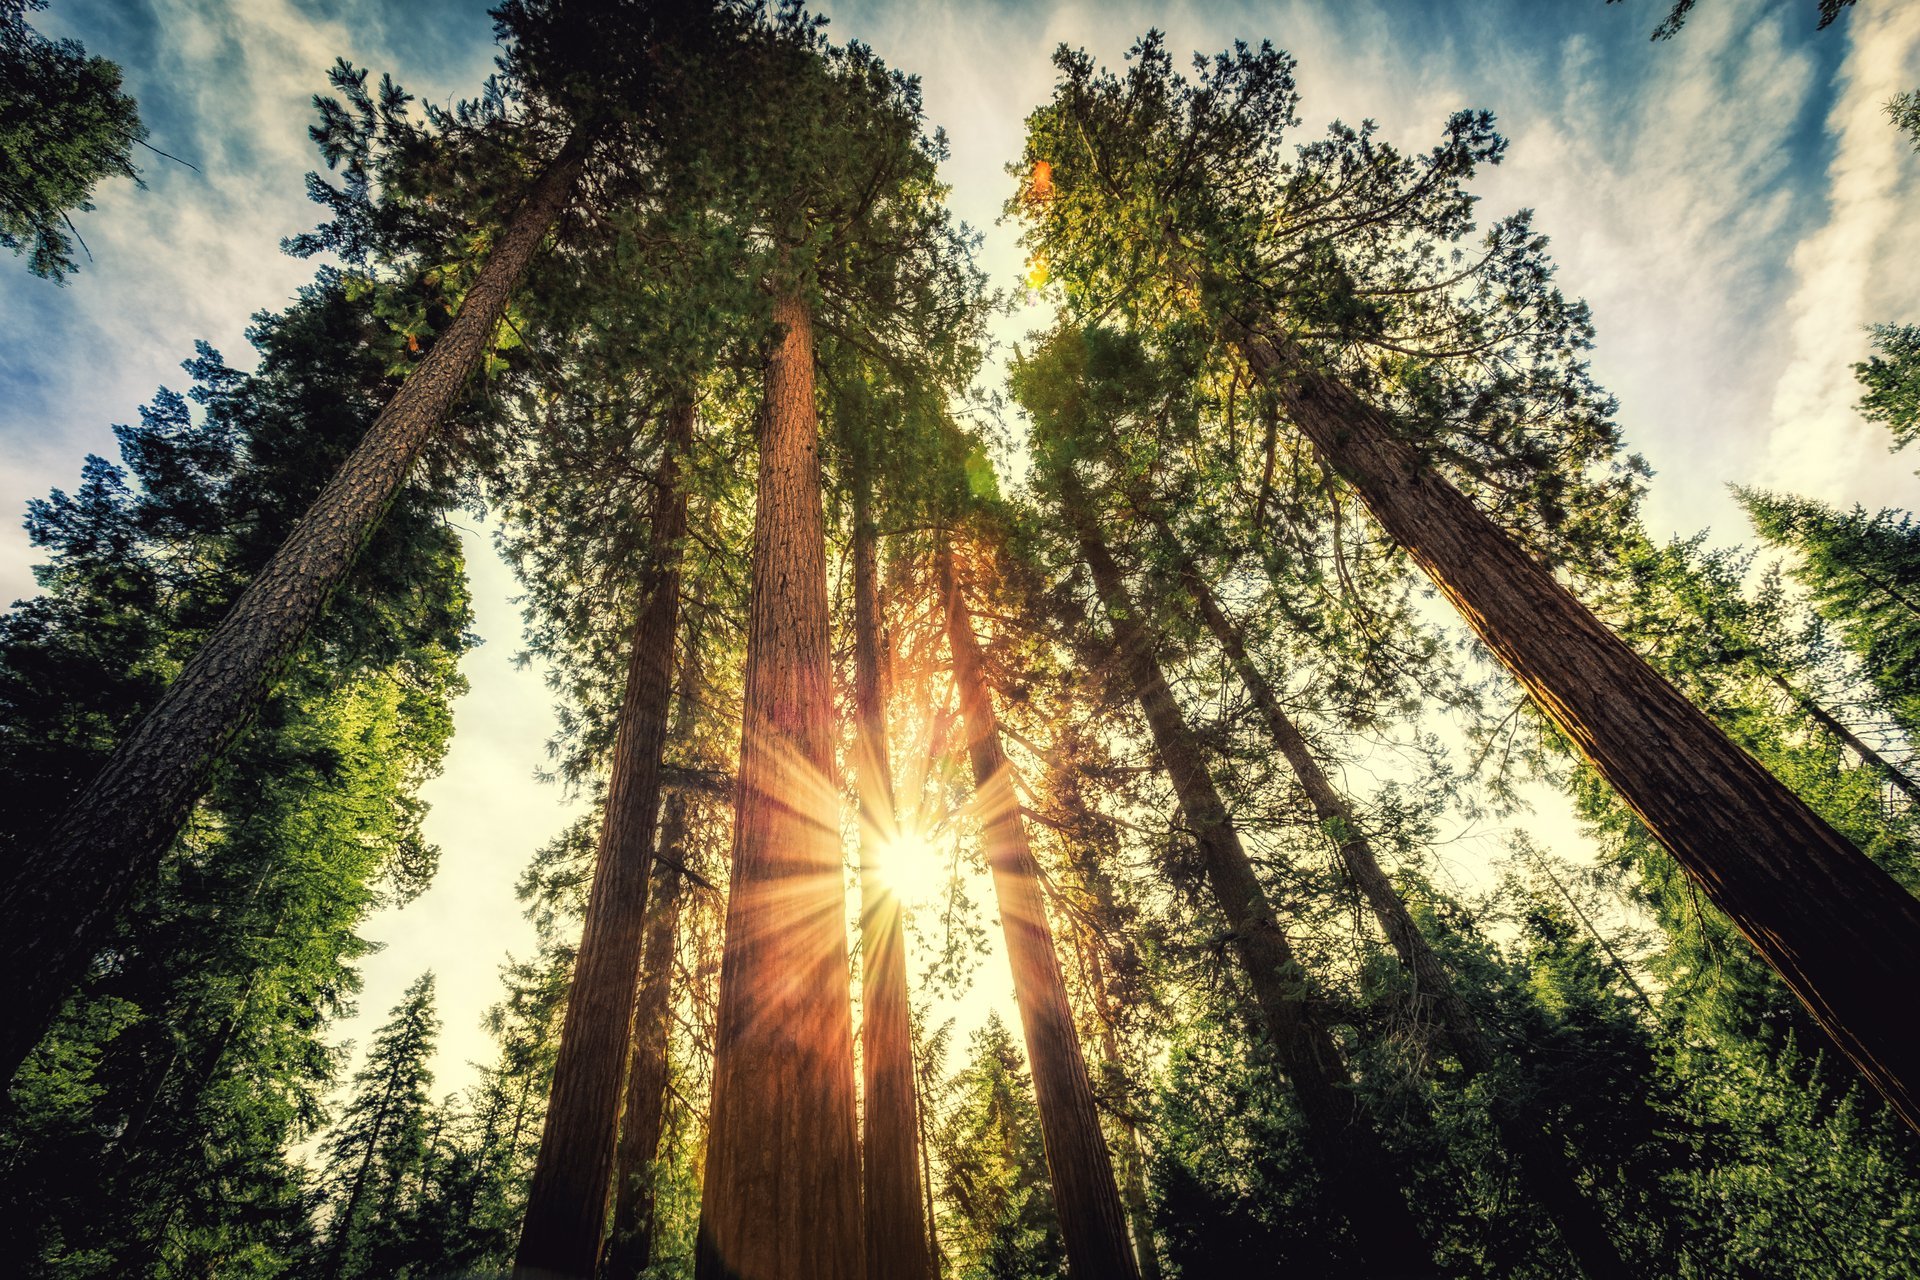 Giant Sequoias of Yosemite National Park